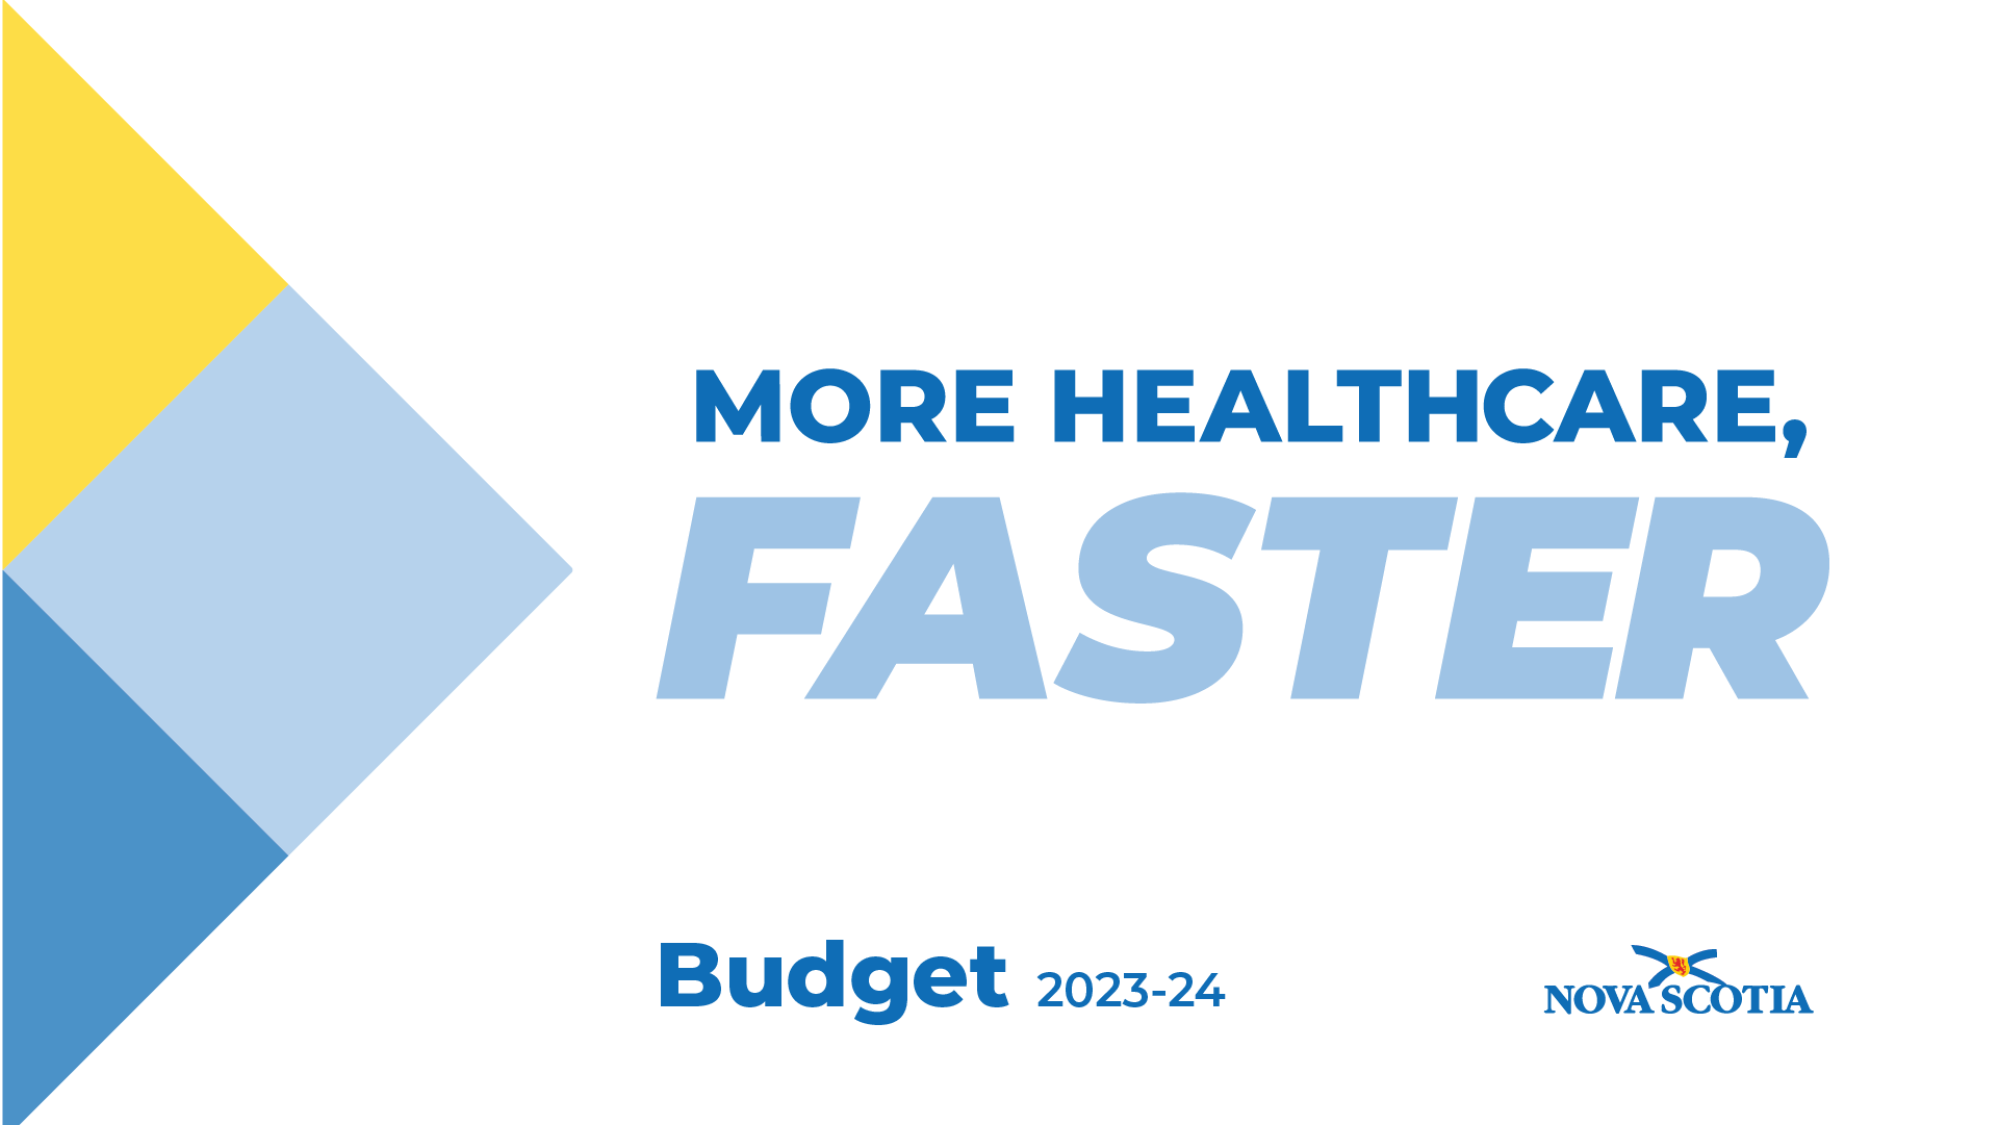 More healthcare, faster